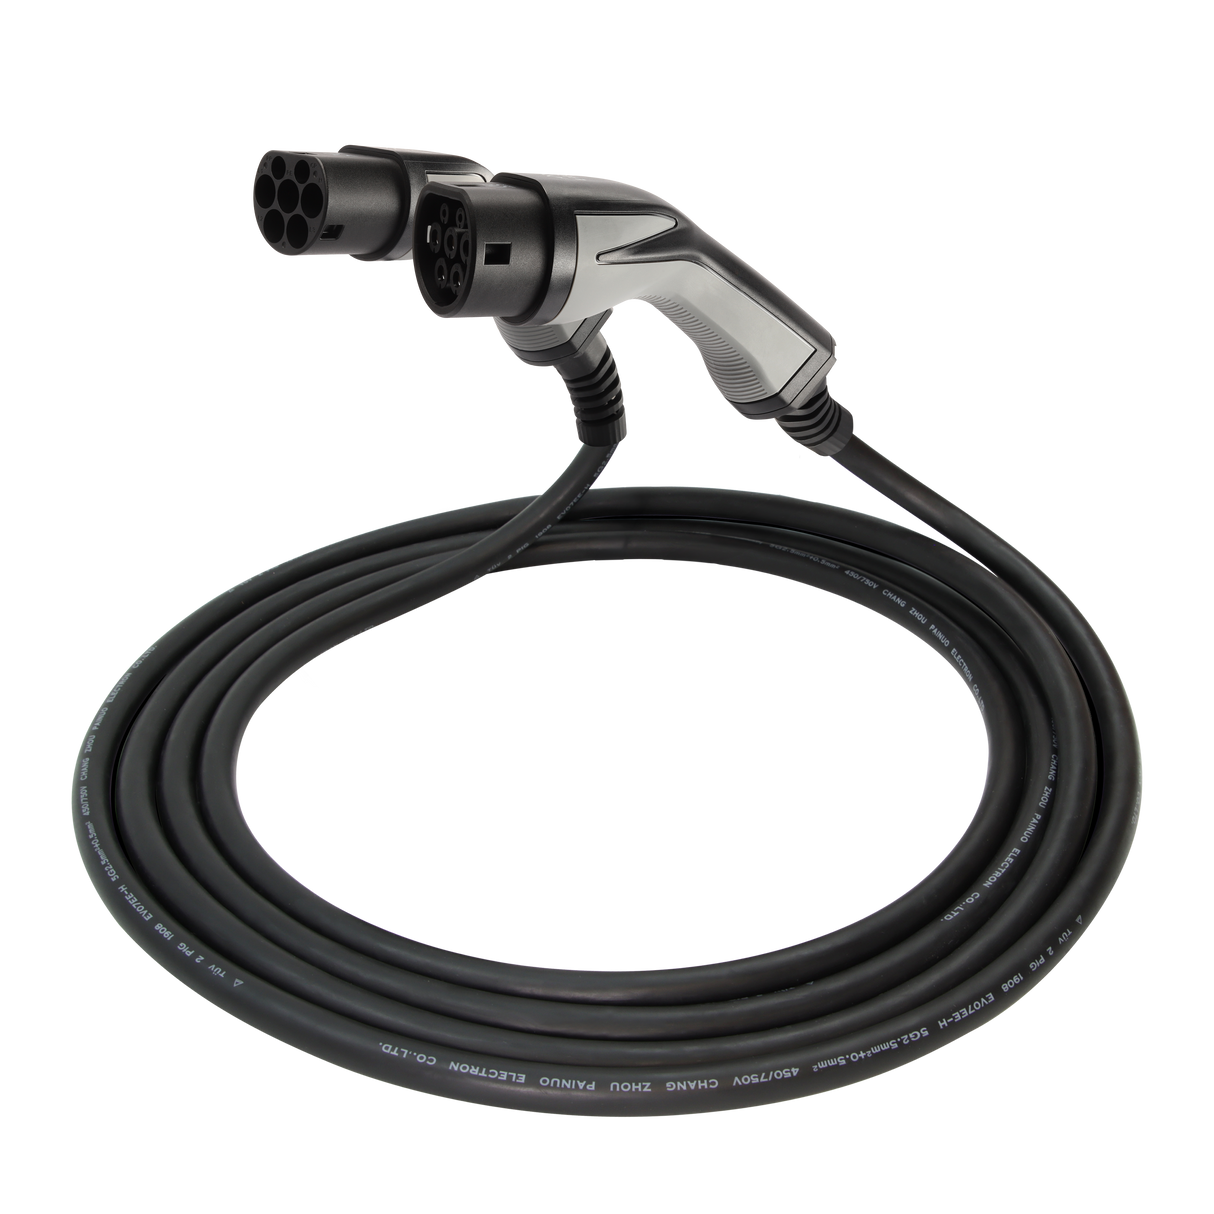 Charging cable Citroen E -C4 - Erock Pro Type 2 - 16A 3 phase (11 kW)